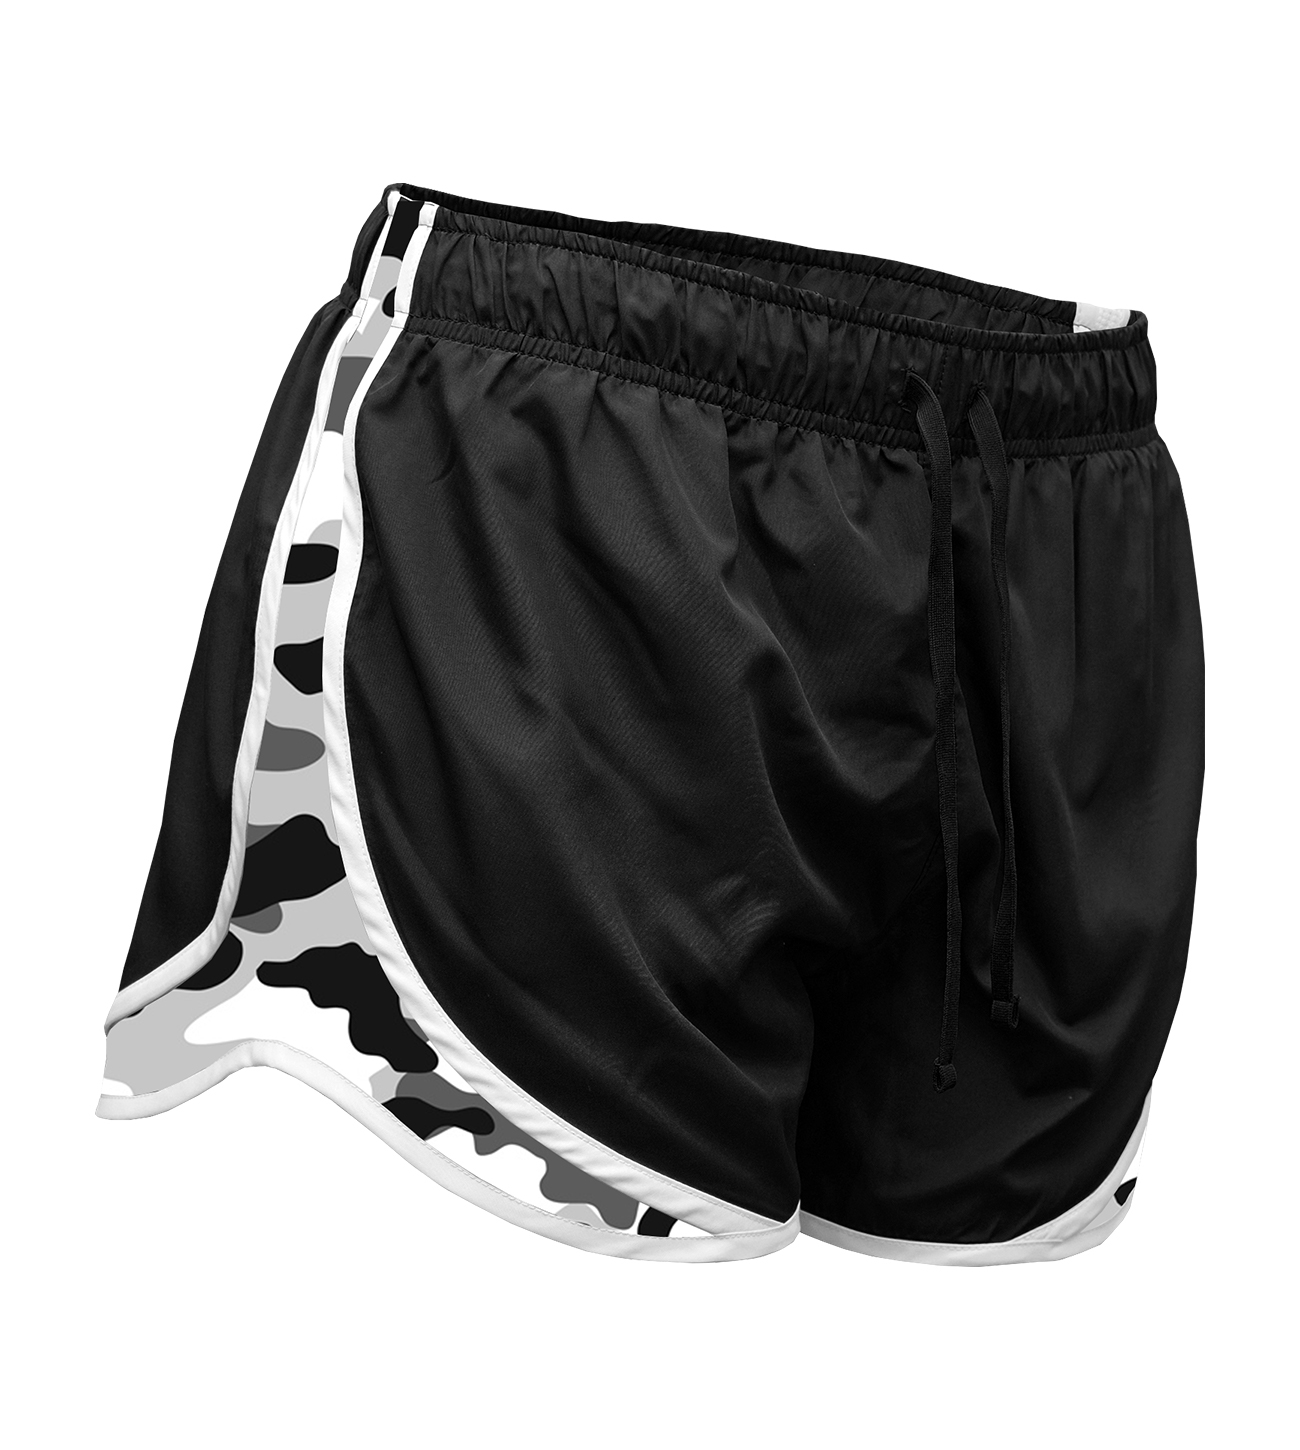 BAW Athletic Wear S701Y - Girls Running Short $10.93 - Youth's Shorts